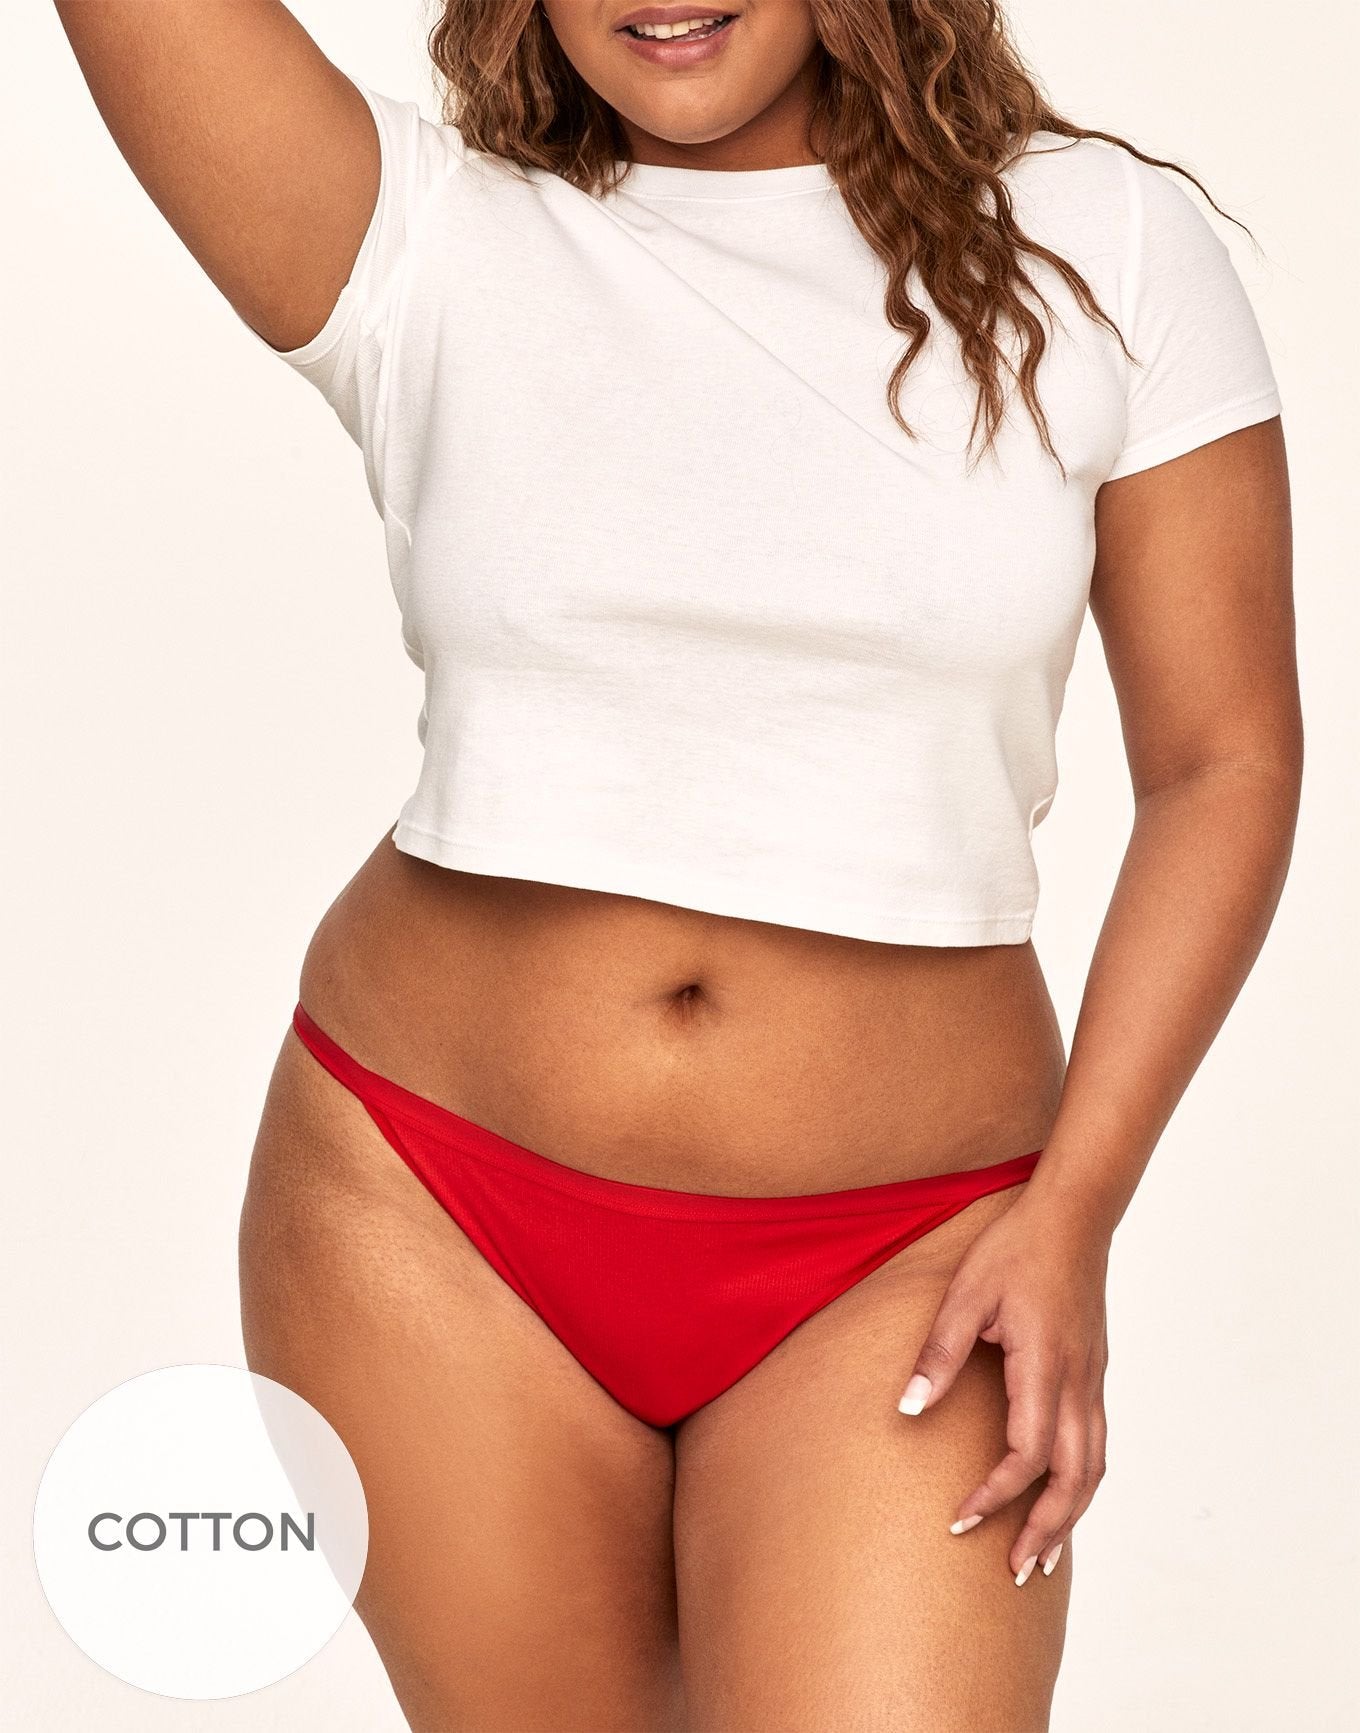 Adore Me Diana Ribbed Cotton Bikini in color Red Pepper 3ET8 and shape bikini